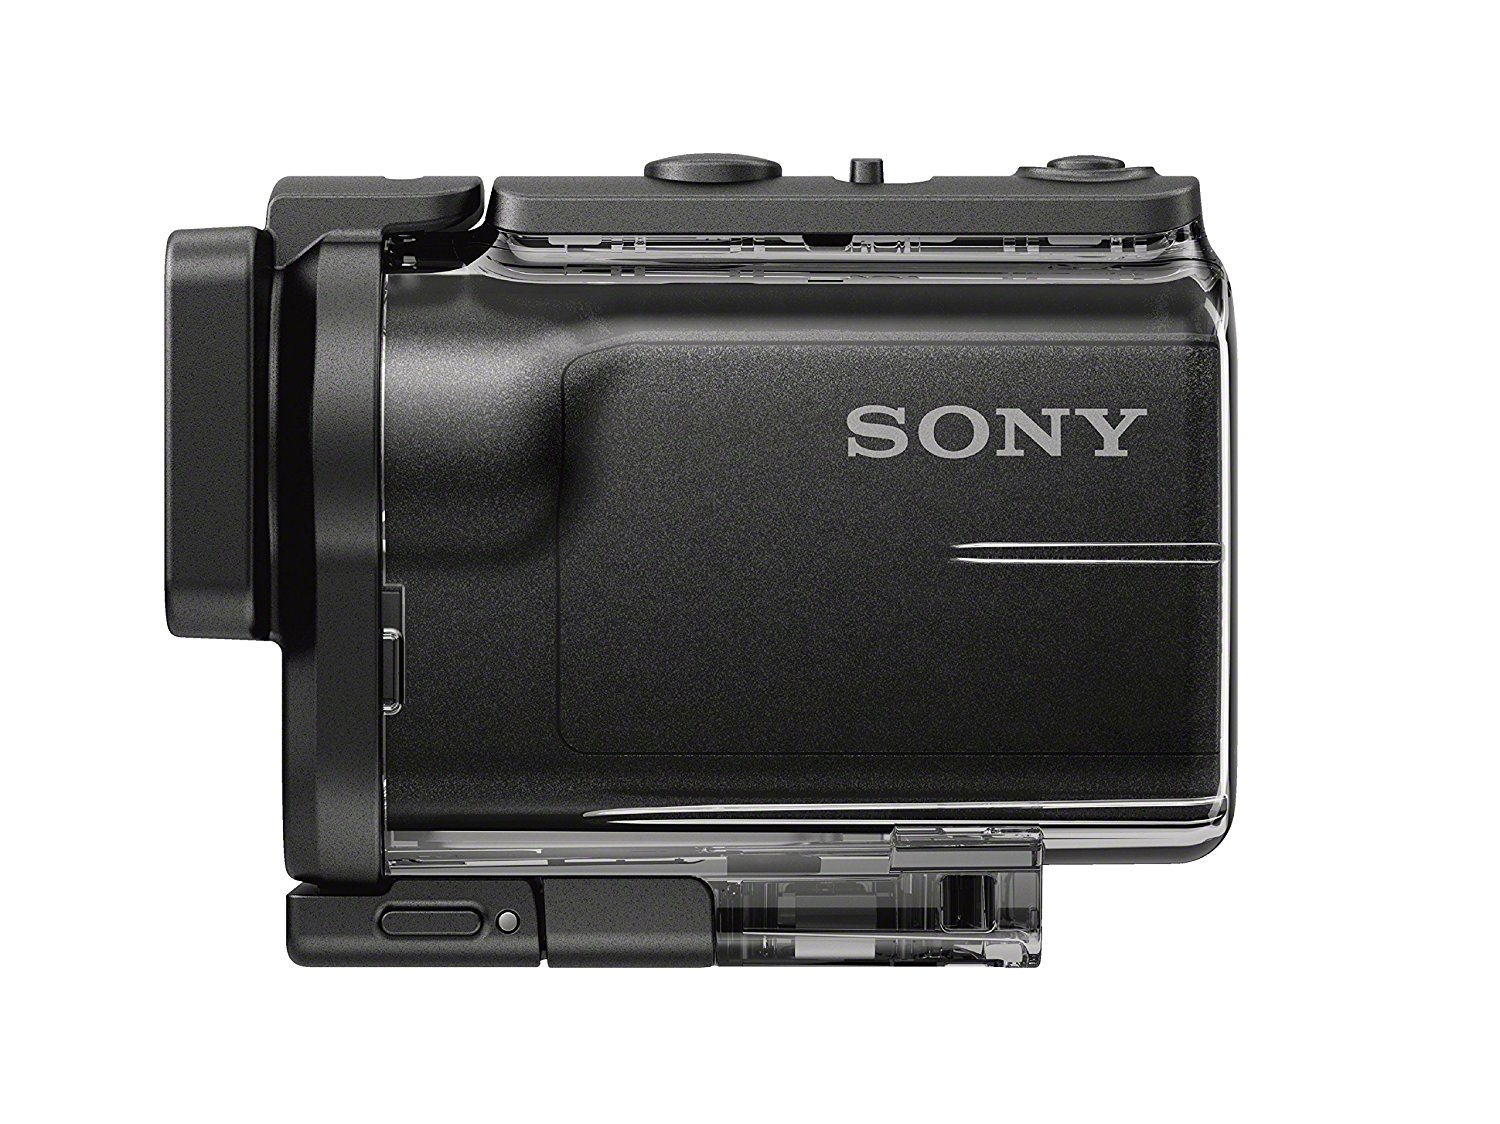 Sony HDRAS50/B Full HD Action Cam (Black)